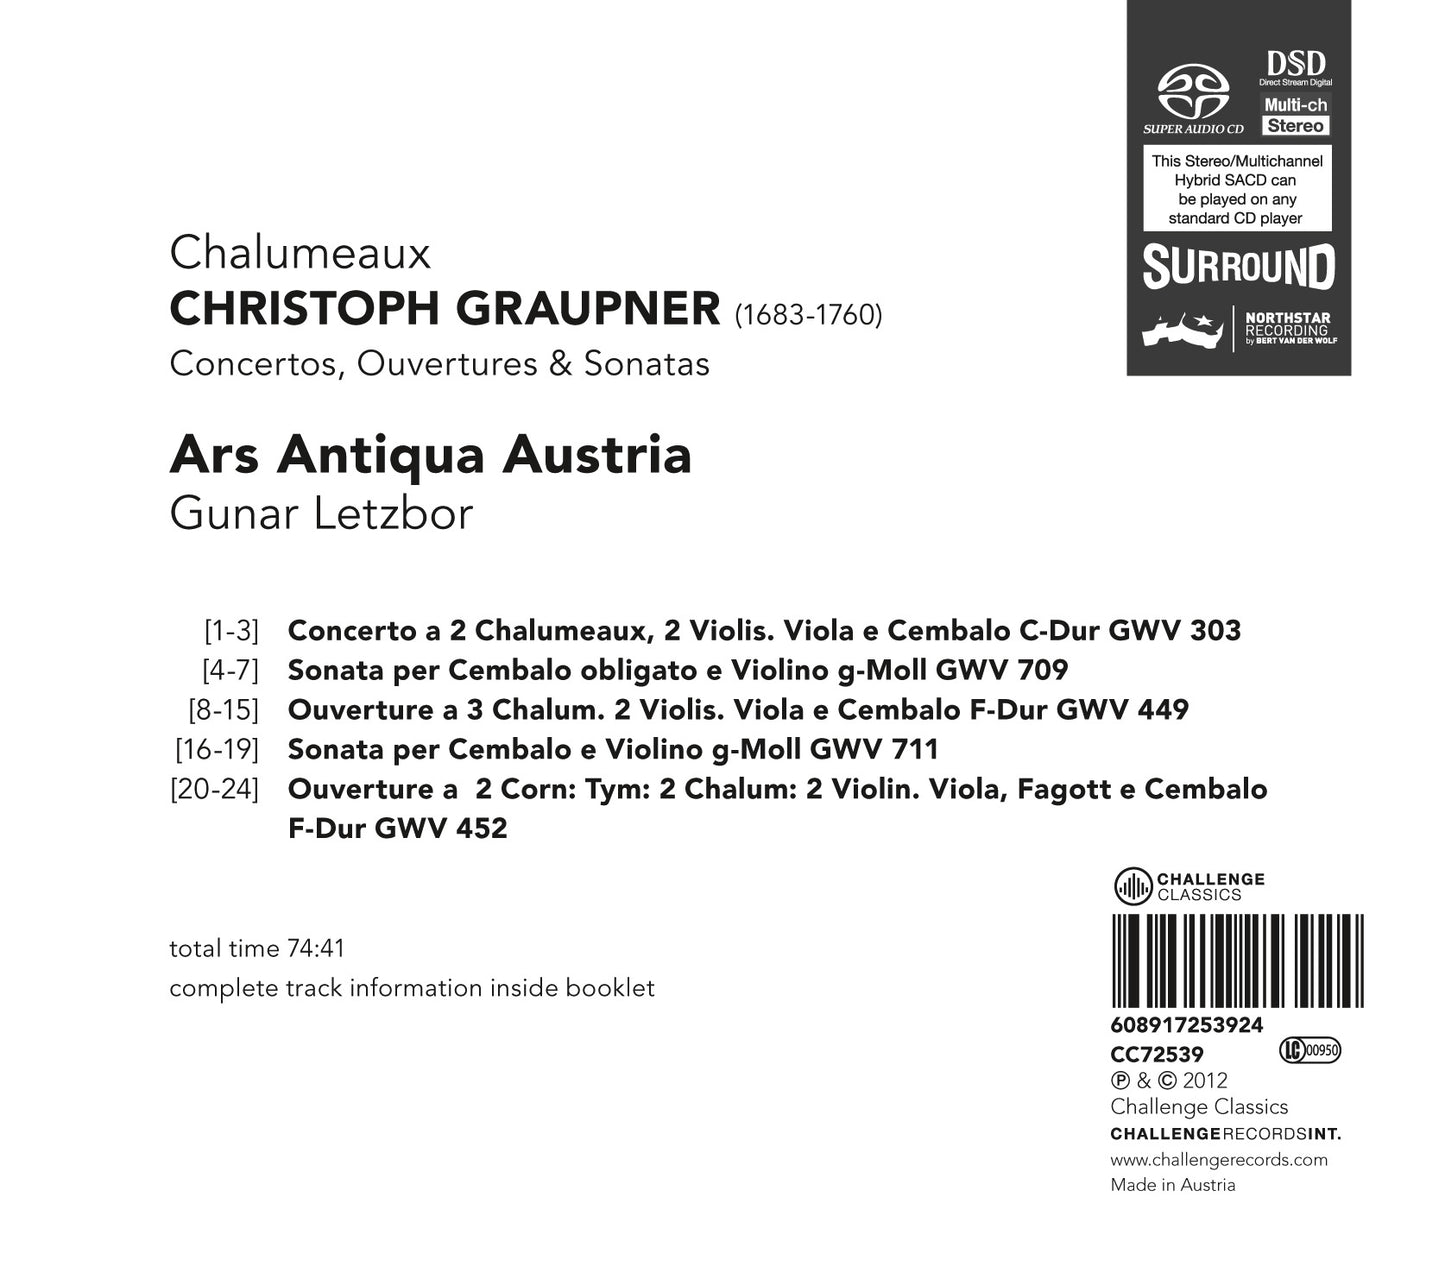 GRAUPNER: CONCERTOS, SONATAS & OUVERTURES FOR CHALUMEAUX  - ARS ANTIQUA AUSTRIA, GUNAR LETZBOR (HYBRID SACD)